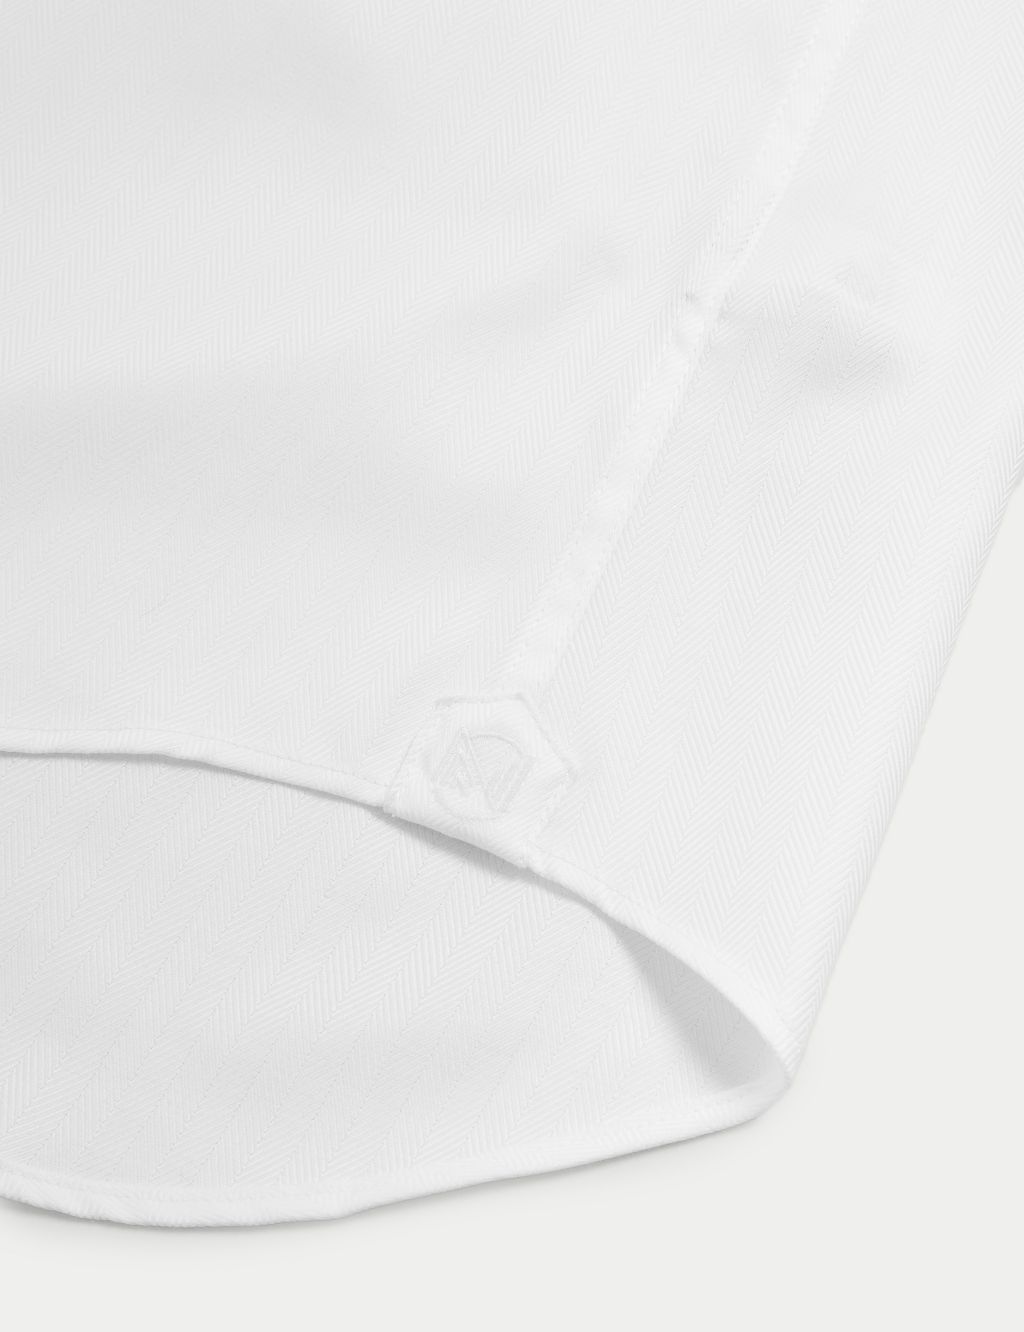 Tailored Fit Pure Cotton Herringbone Shirt image 9